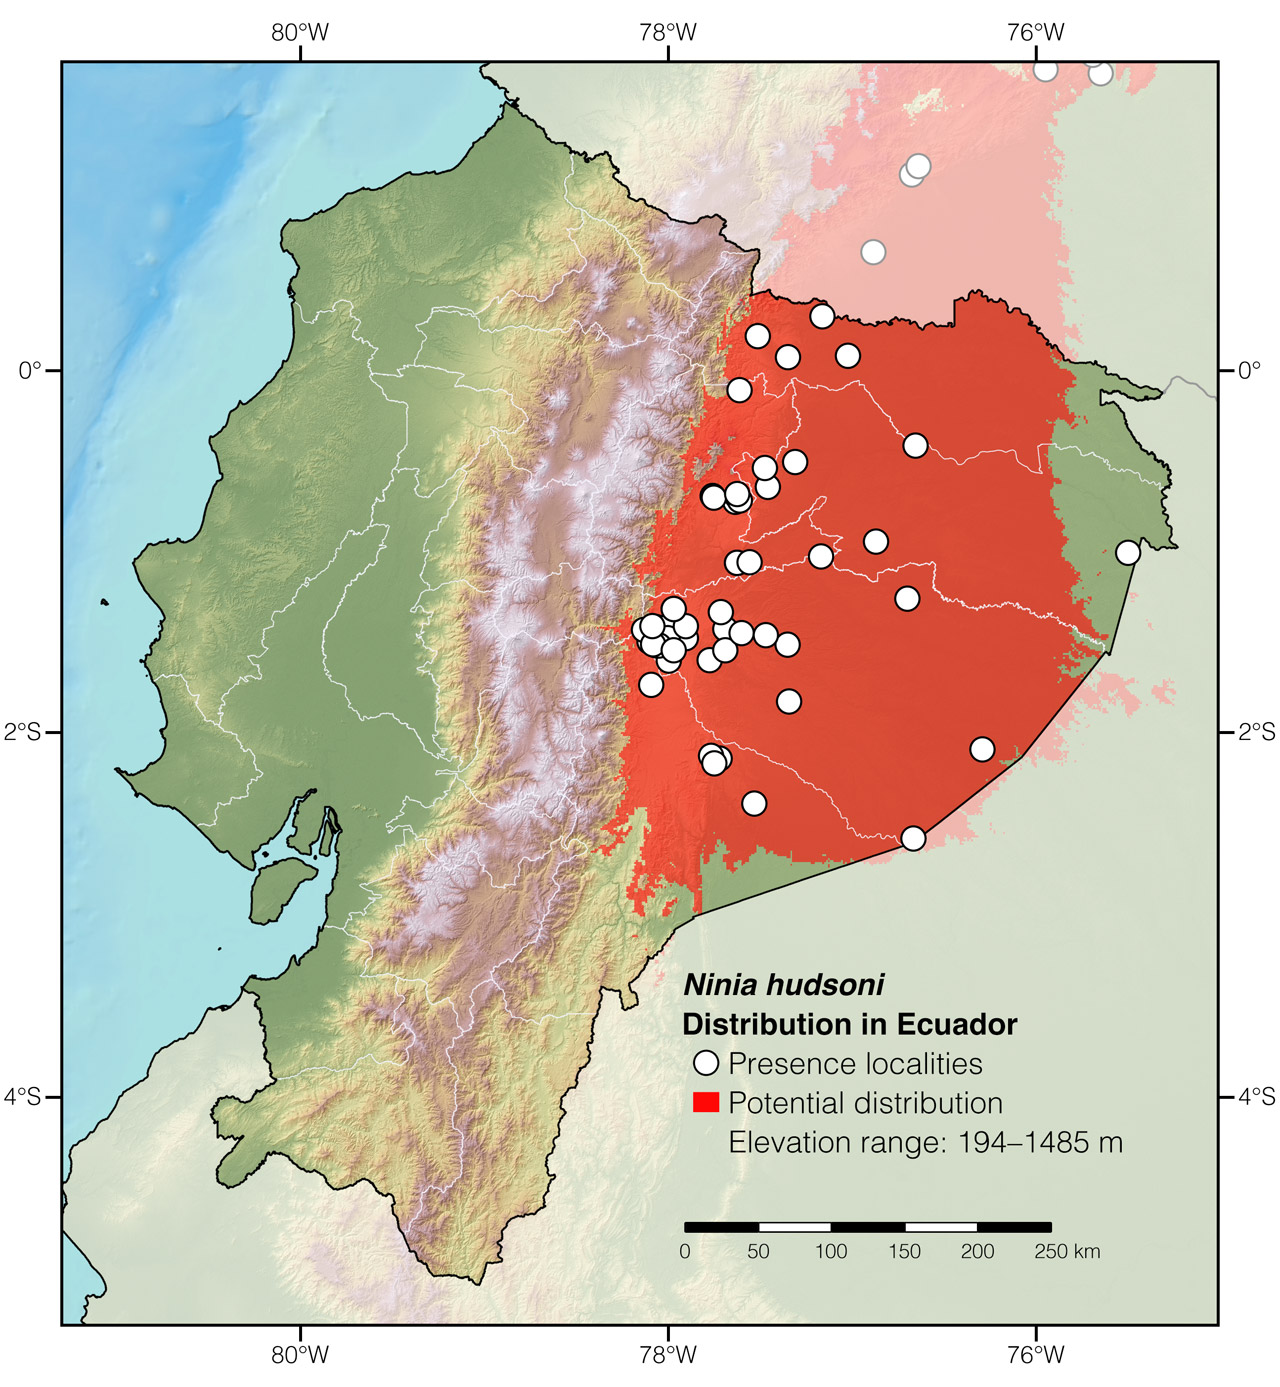 Distribution of Ninia hudsoni in Ecuador